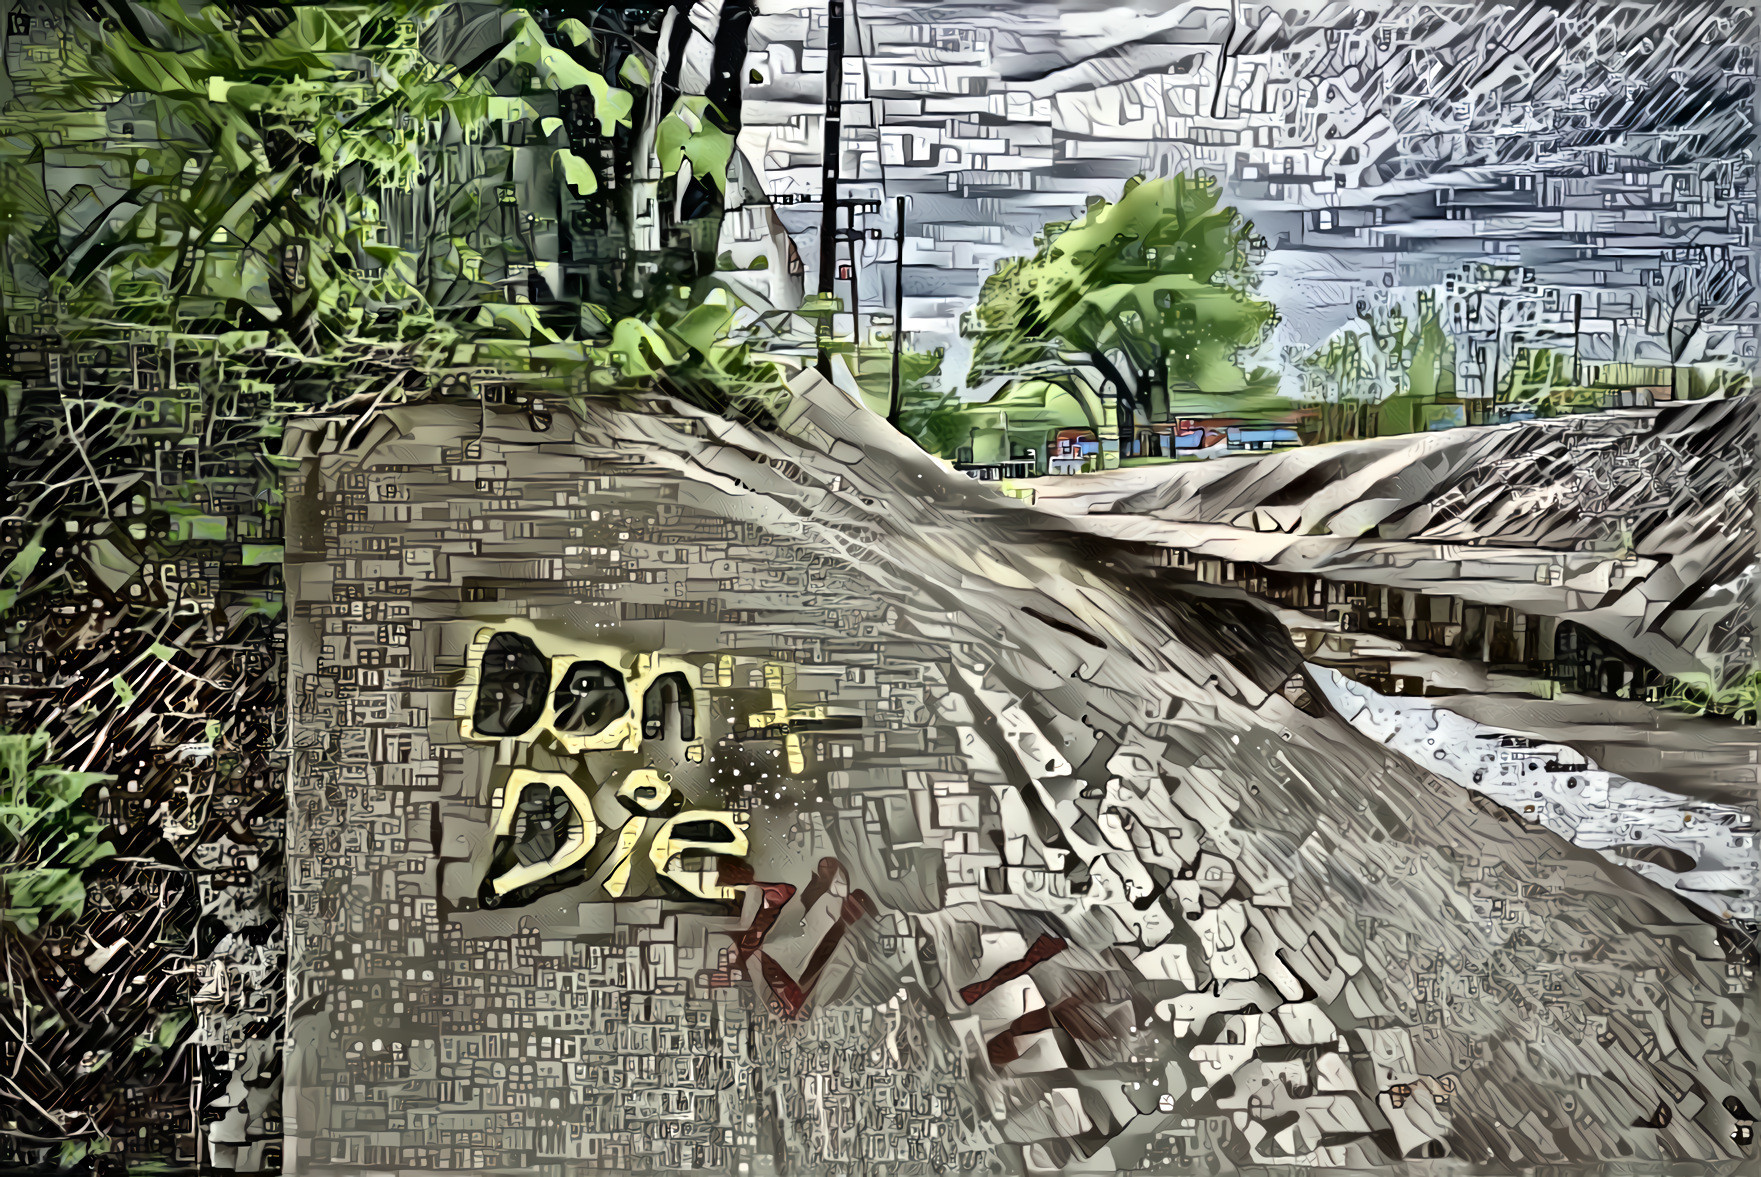 Don't die! — (cubified)